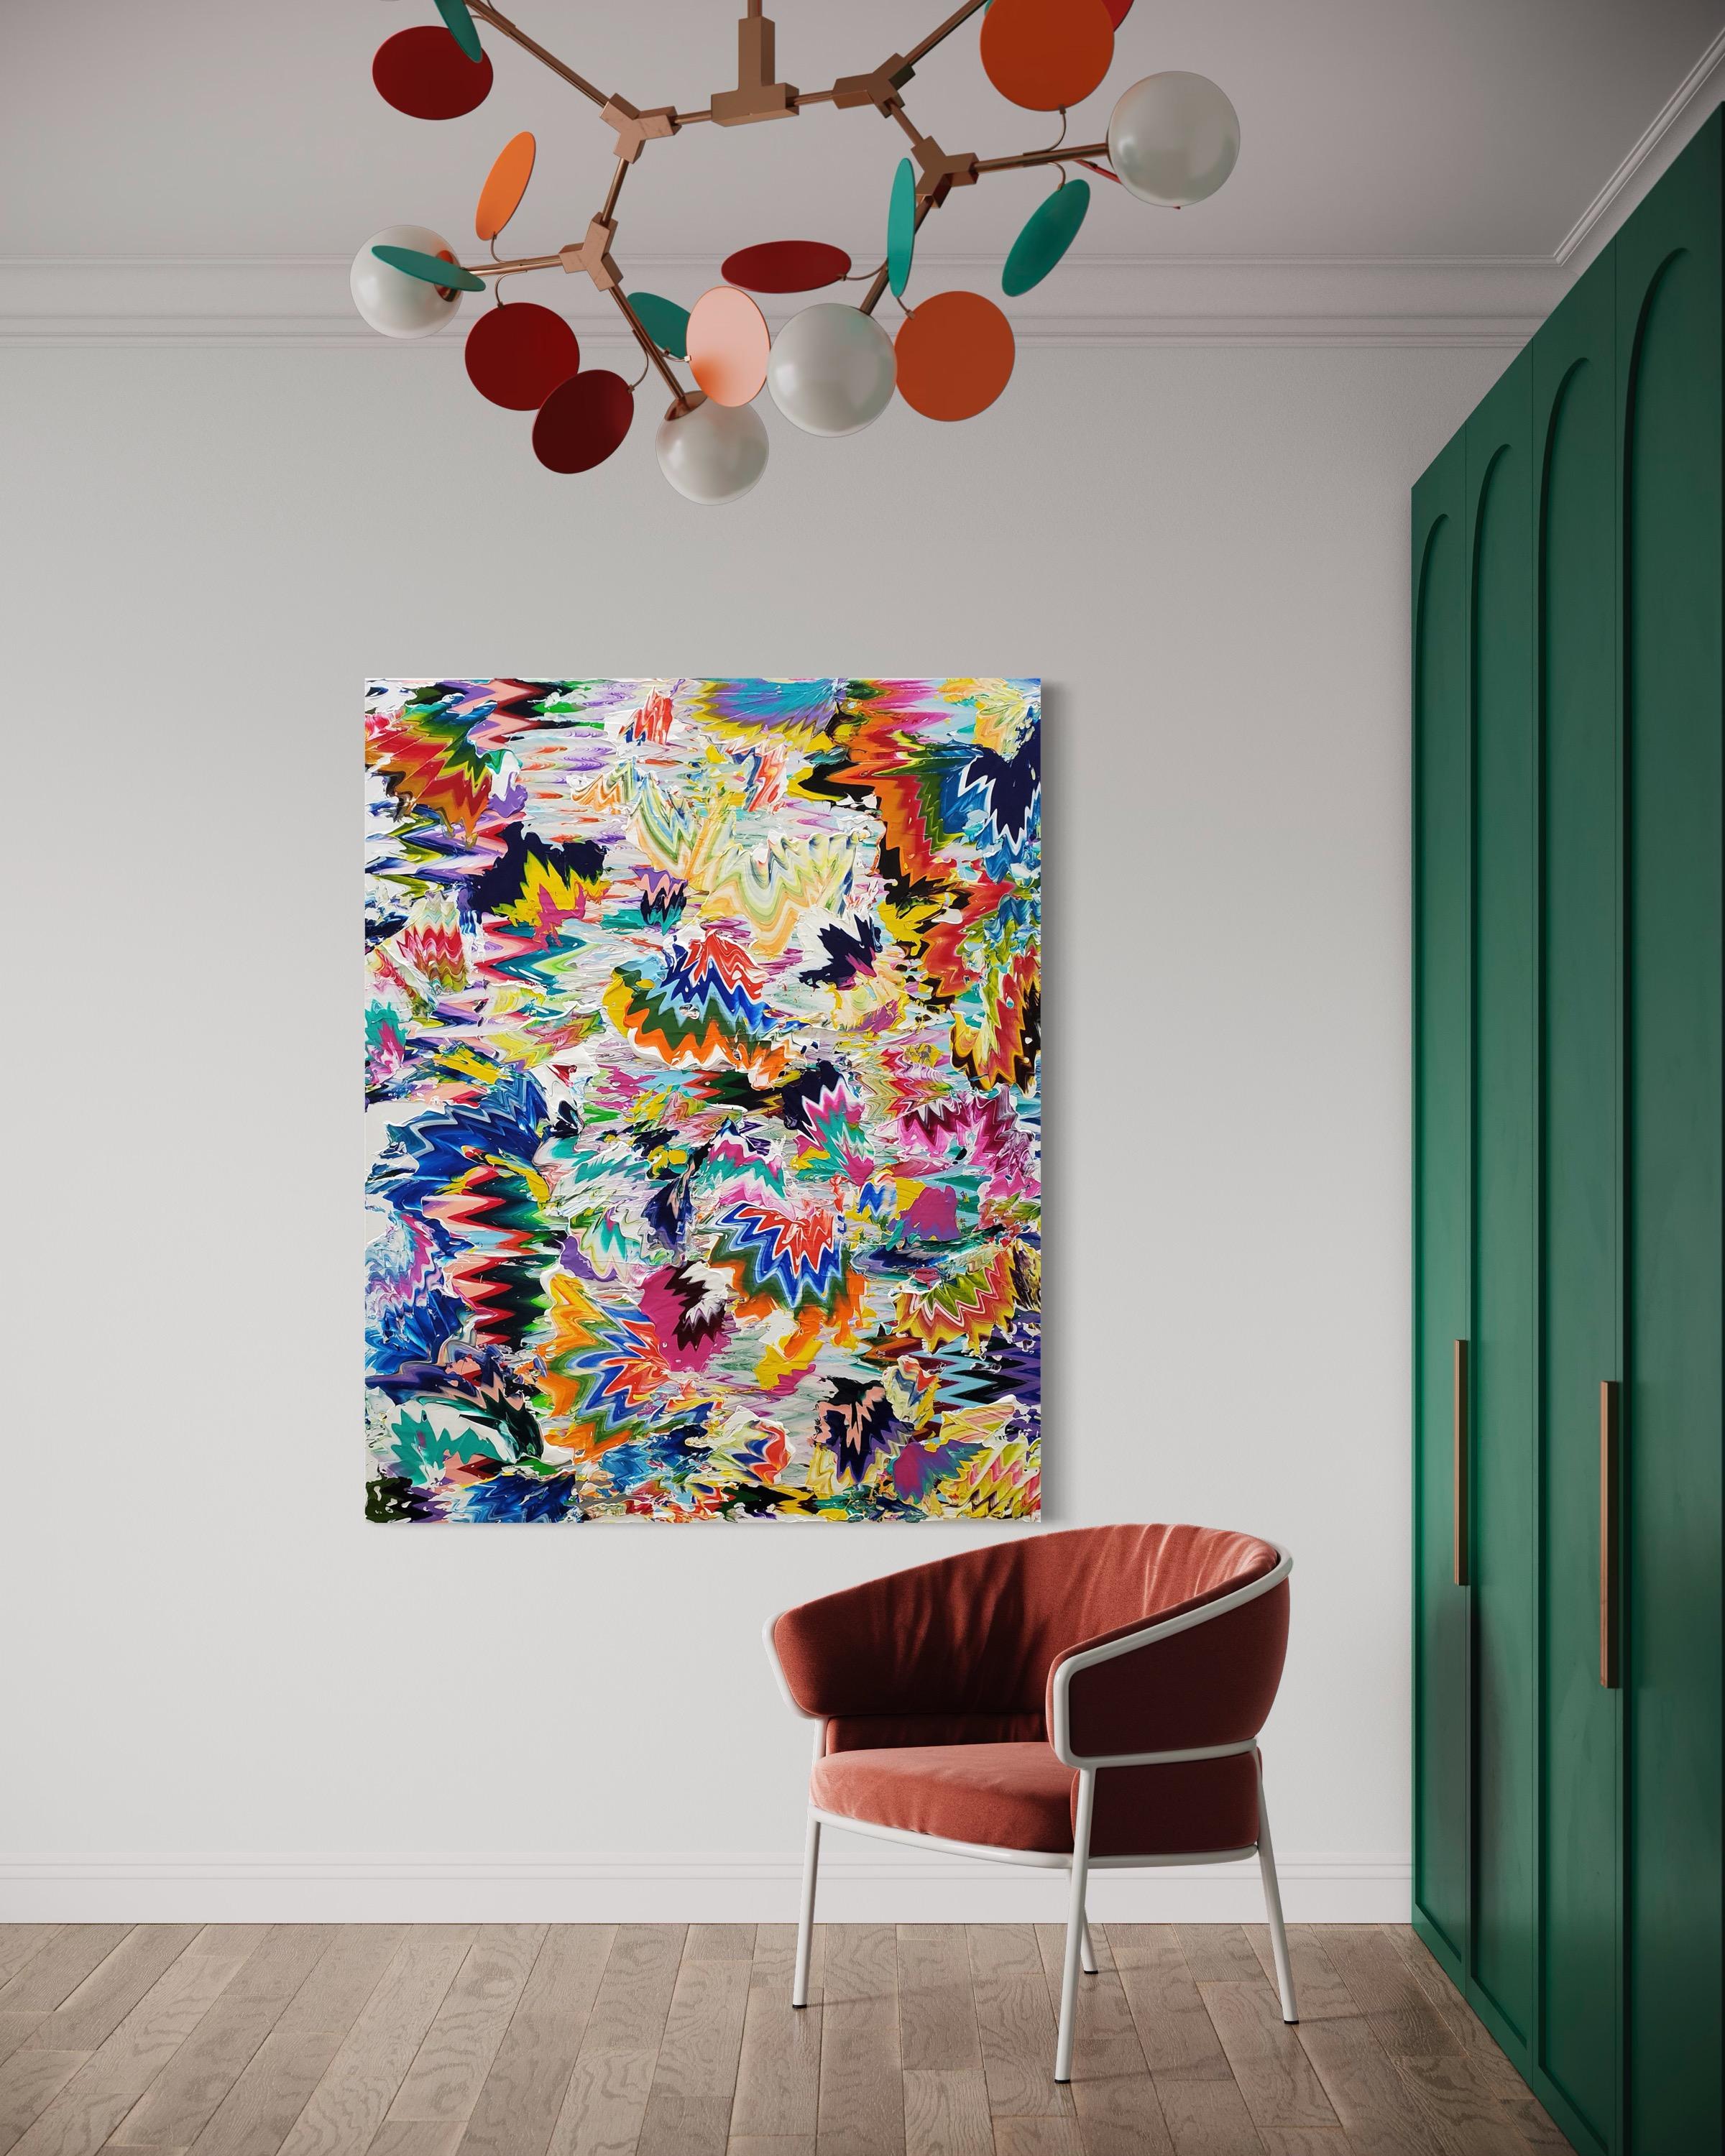 Farbways continued - Helles, mehrfarbiges, abstraktes Gemälde  (Abstrakter Expressionismus), Painting, von Robert Standish 